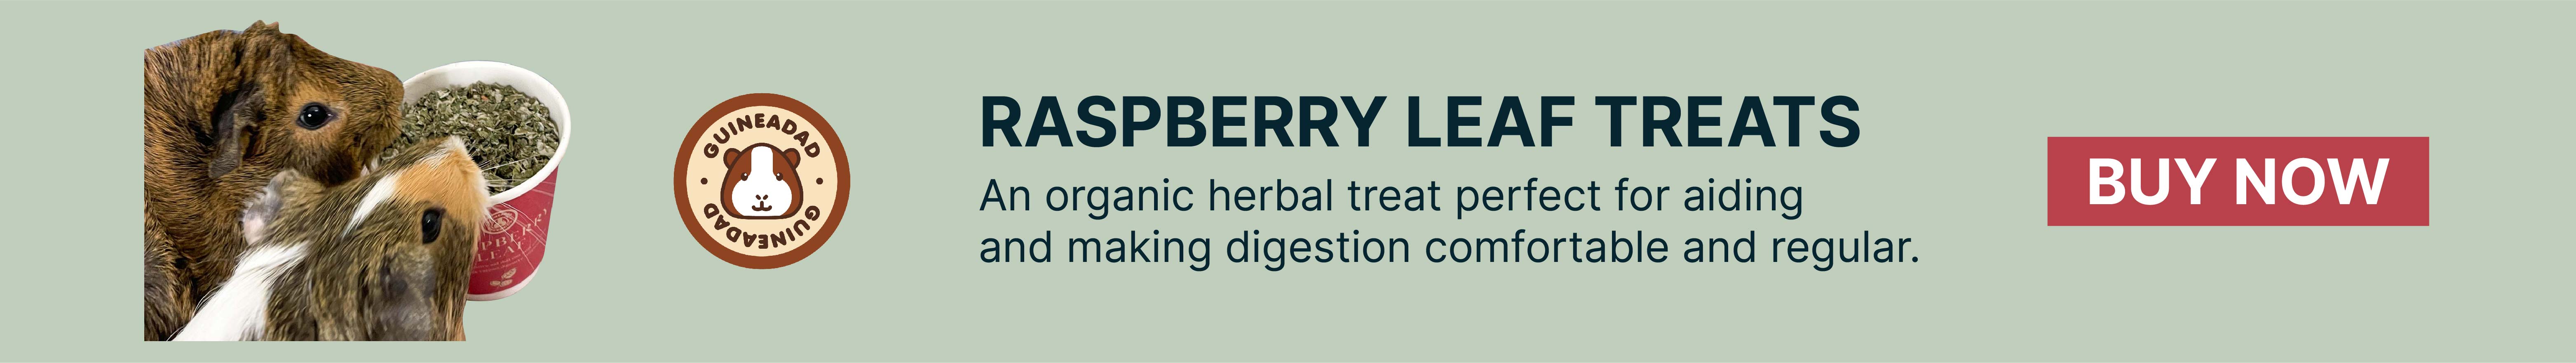 GuineaDad Raspberry Leaf Organic Herbal Treats for guinea pigs